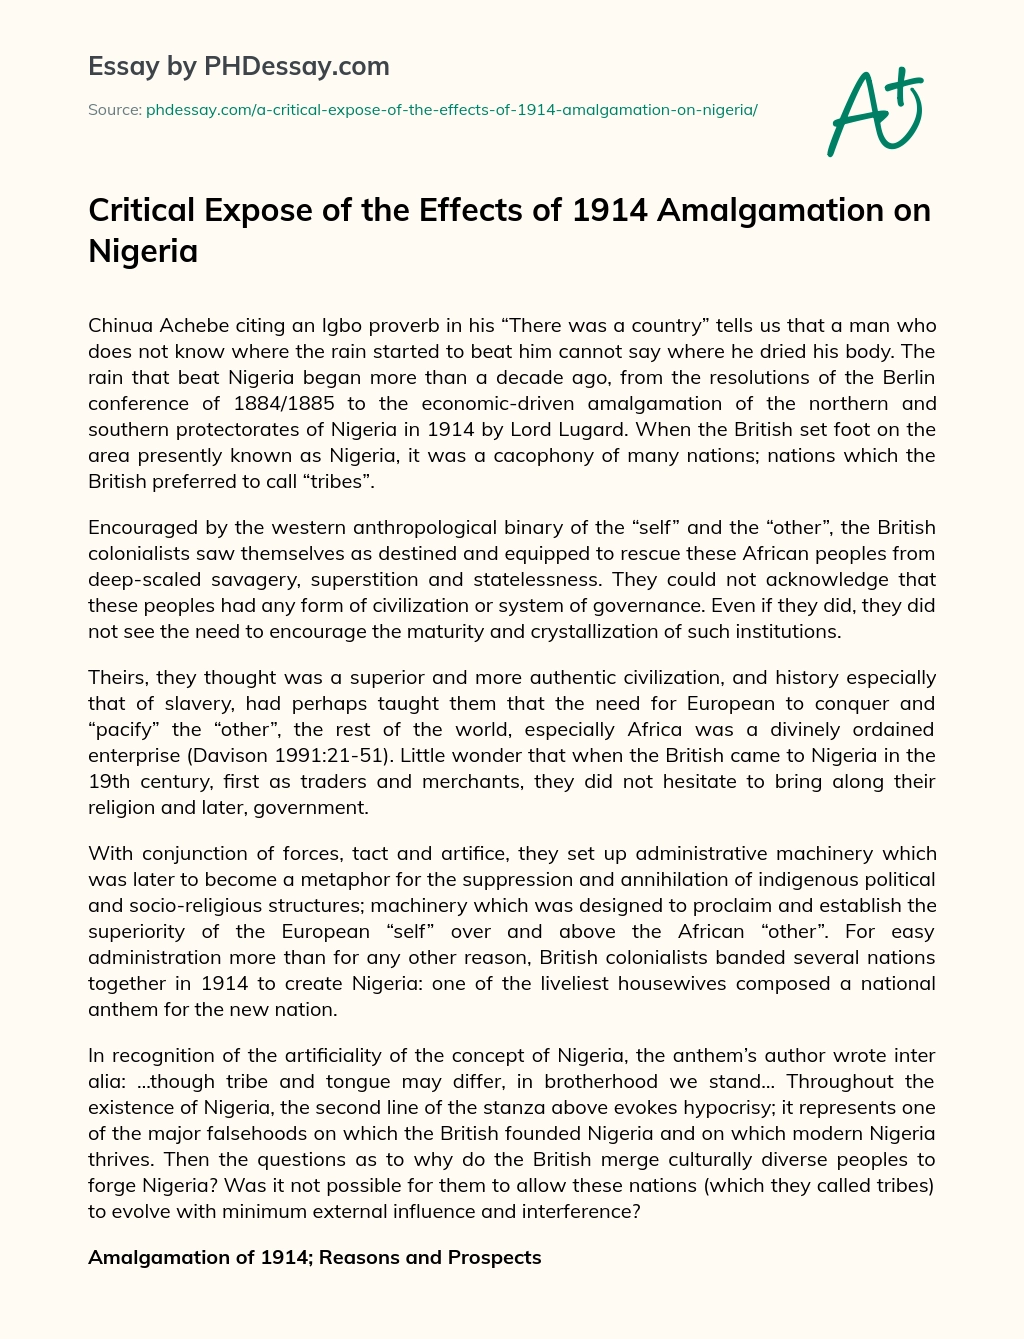 Critical Expose of the Effects of 1914 Amalgamation on Nigeria essay